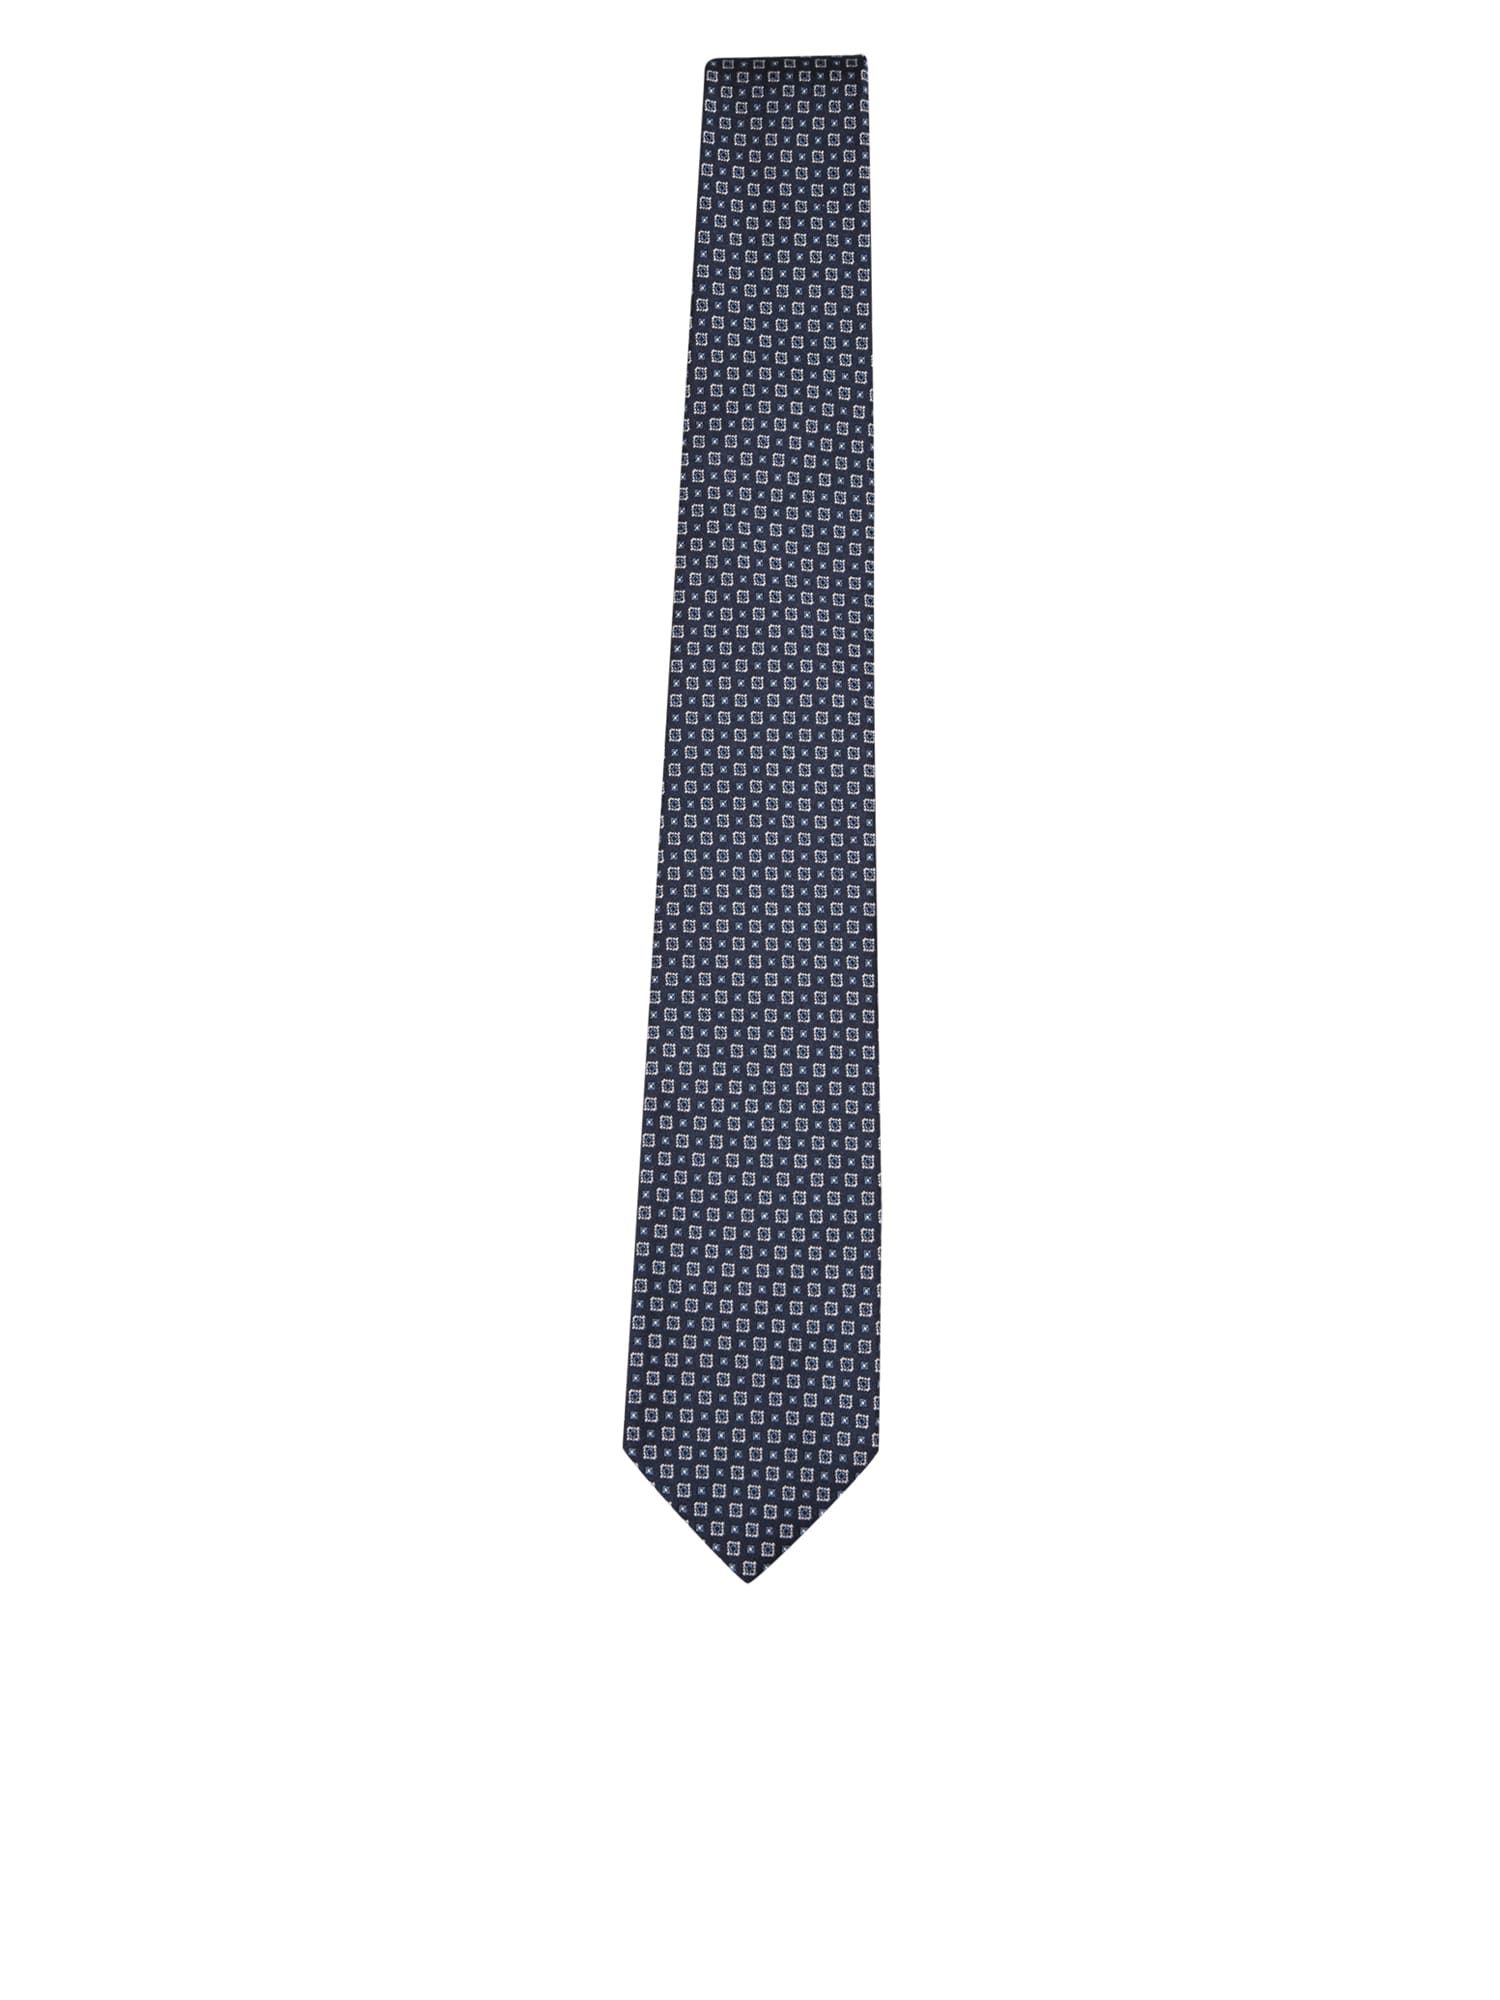 Patterned Dark Blue Tie